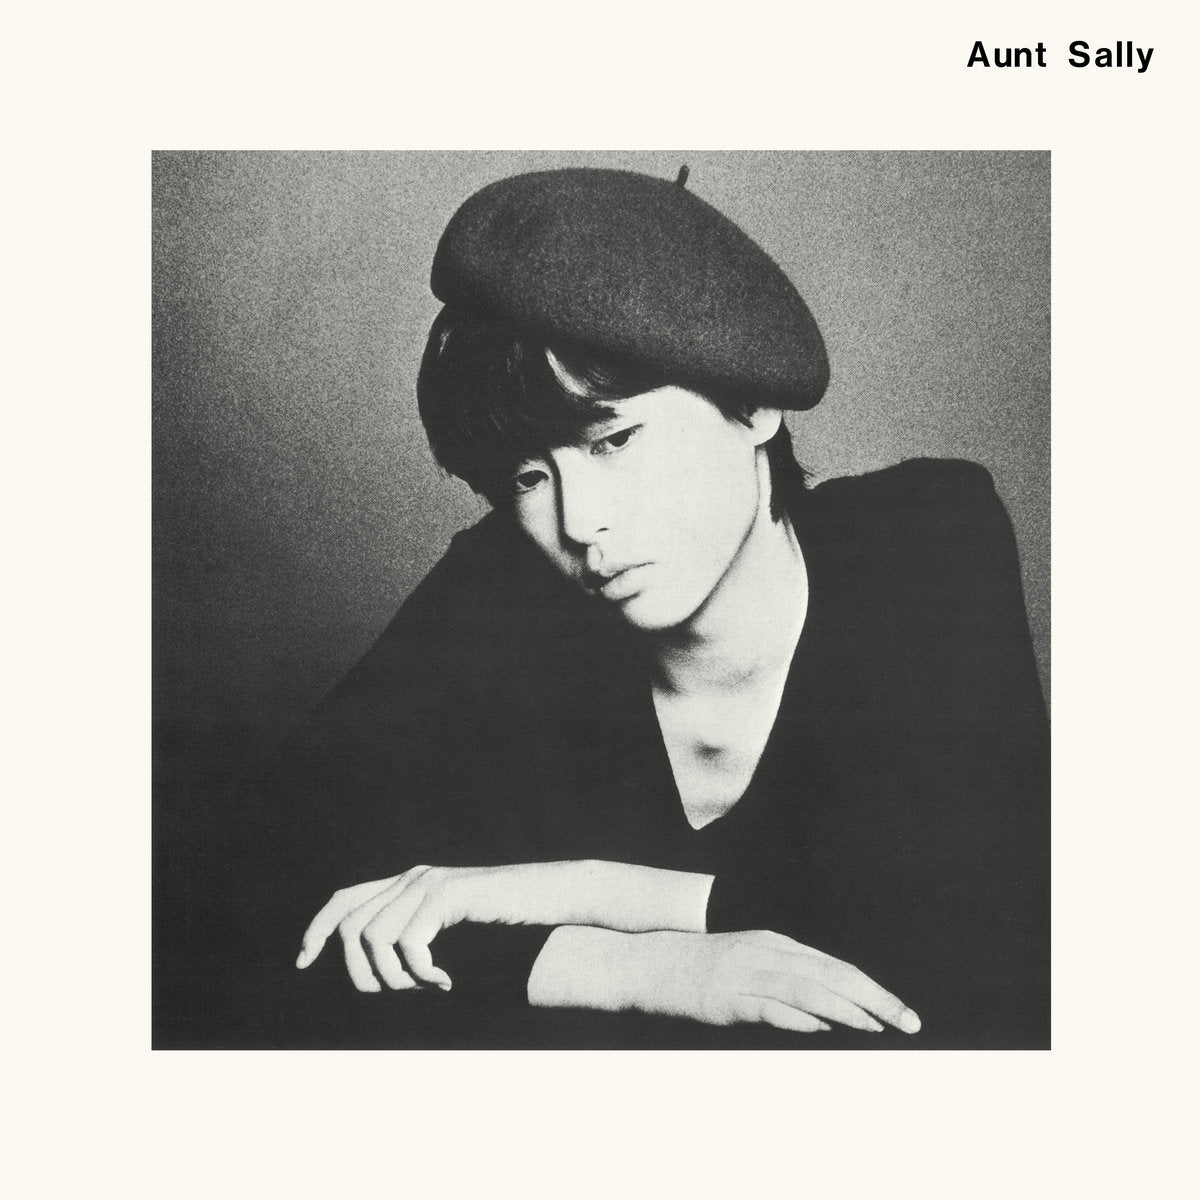 AUNT SALLY - "AUNT SALLY" LP